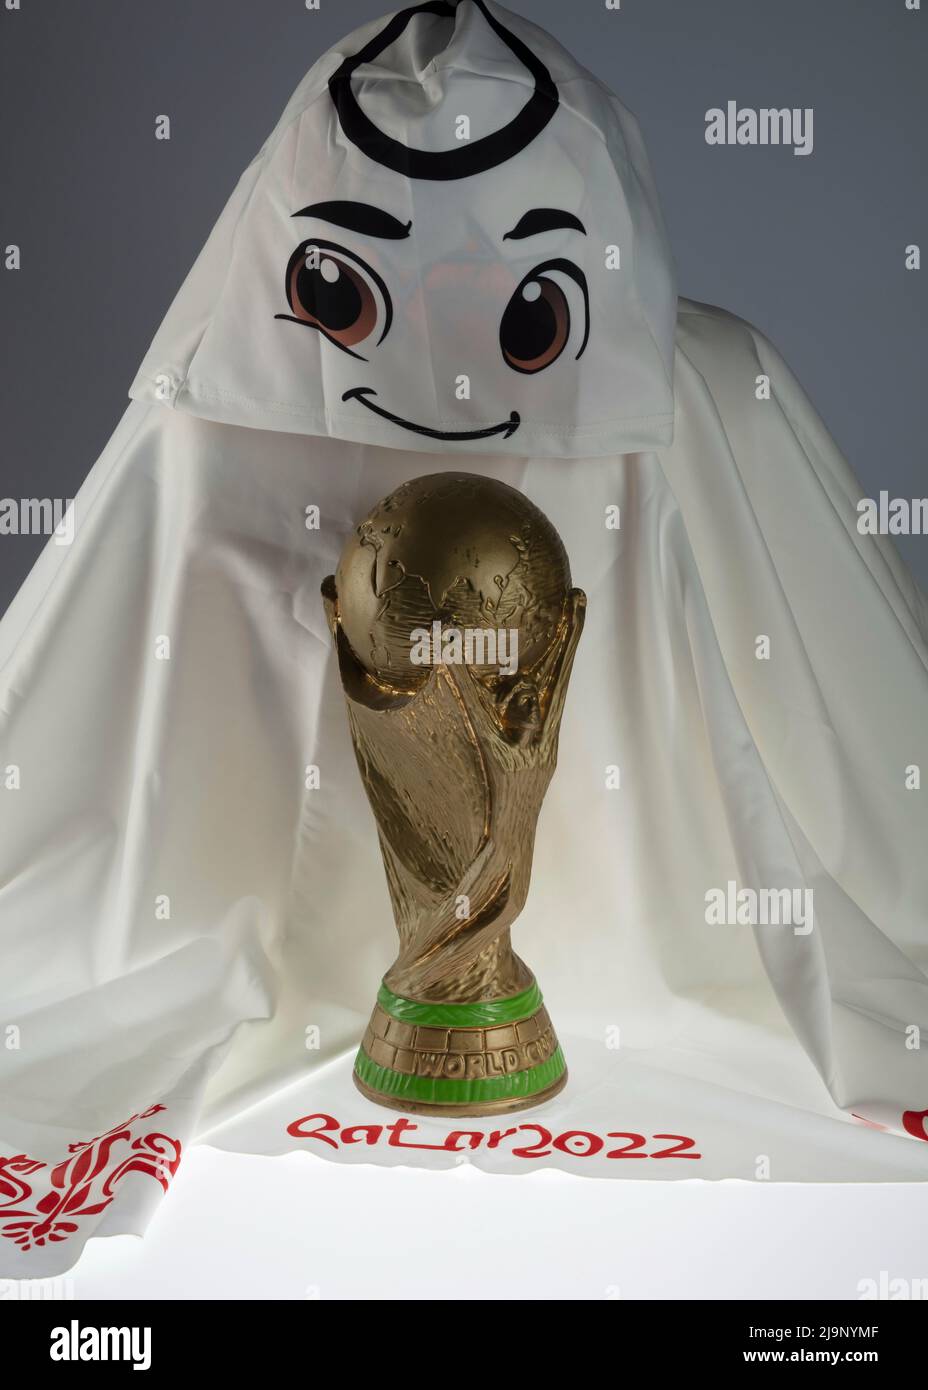 Qatar World Cup mascot name La'eeb and story behind the character